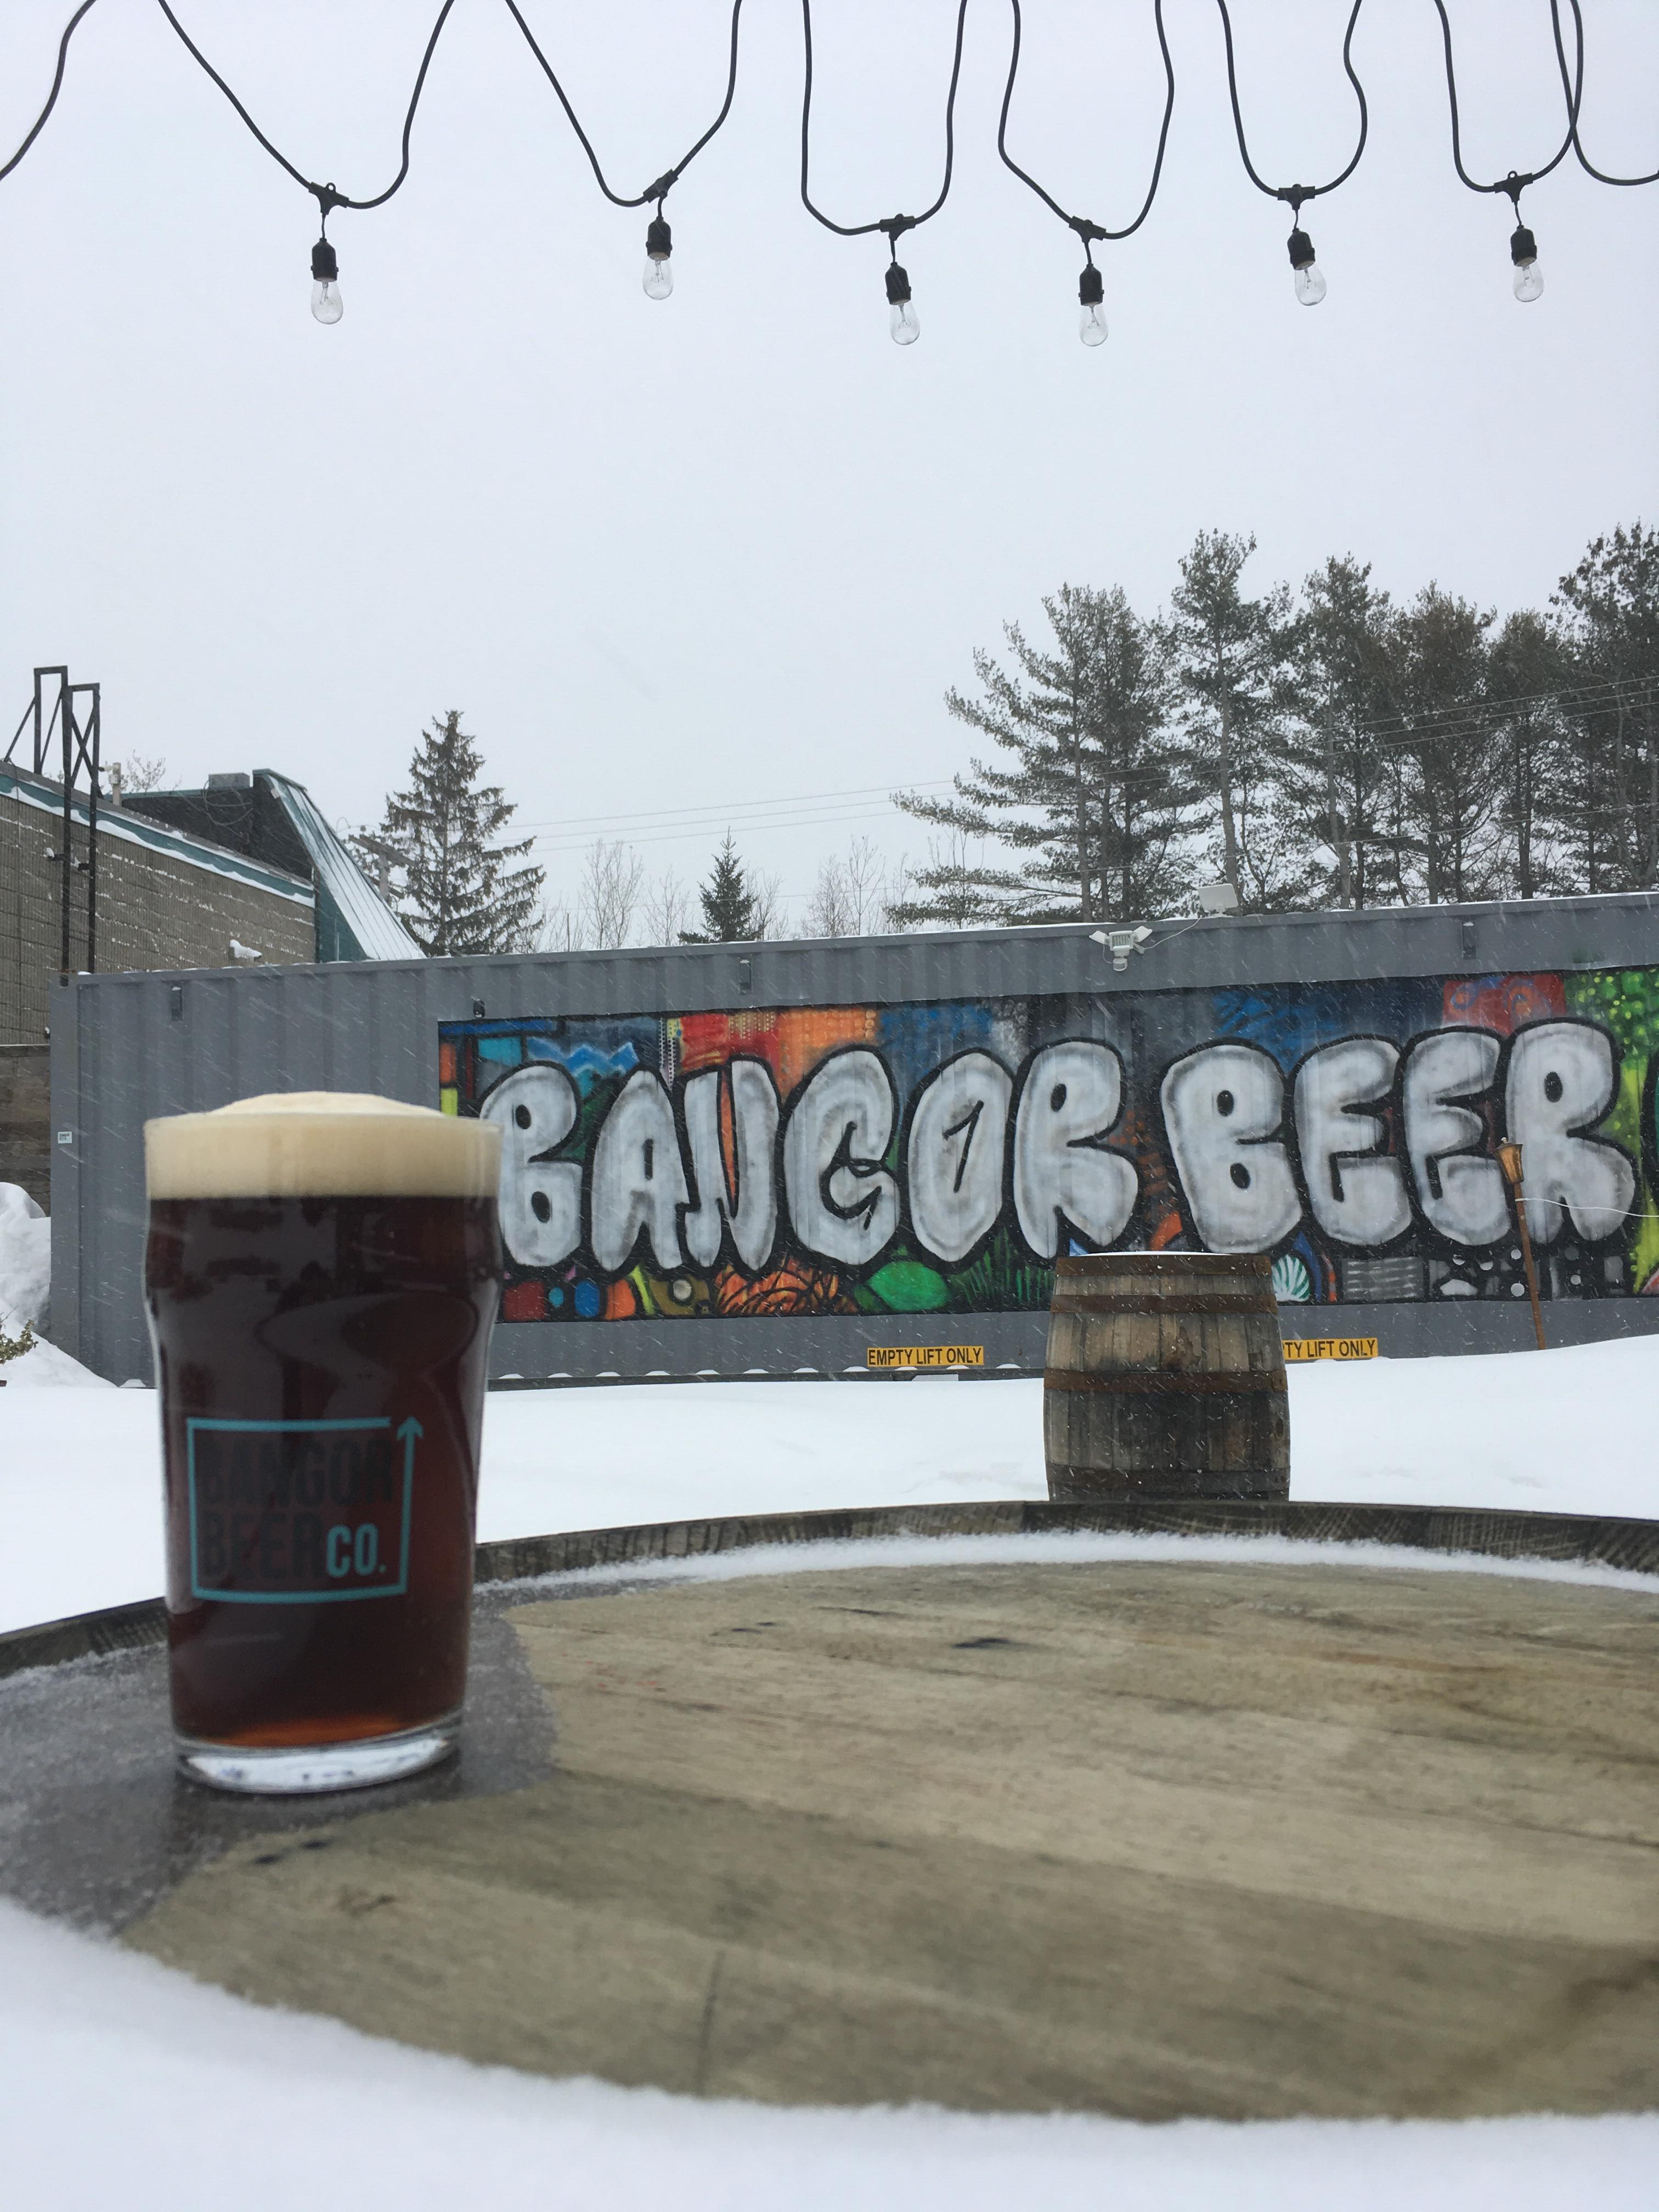 Photos courtesy of Bangor Beer Co. and Jared Lambert